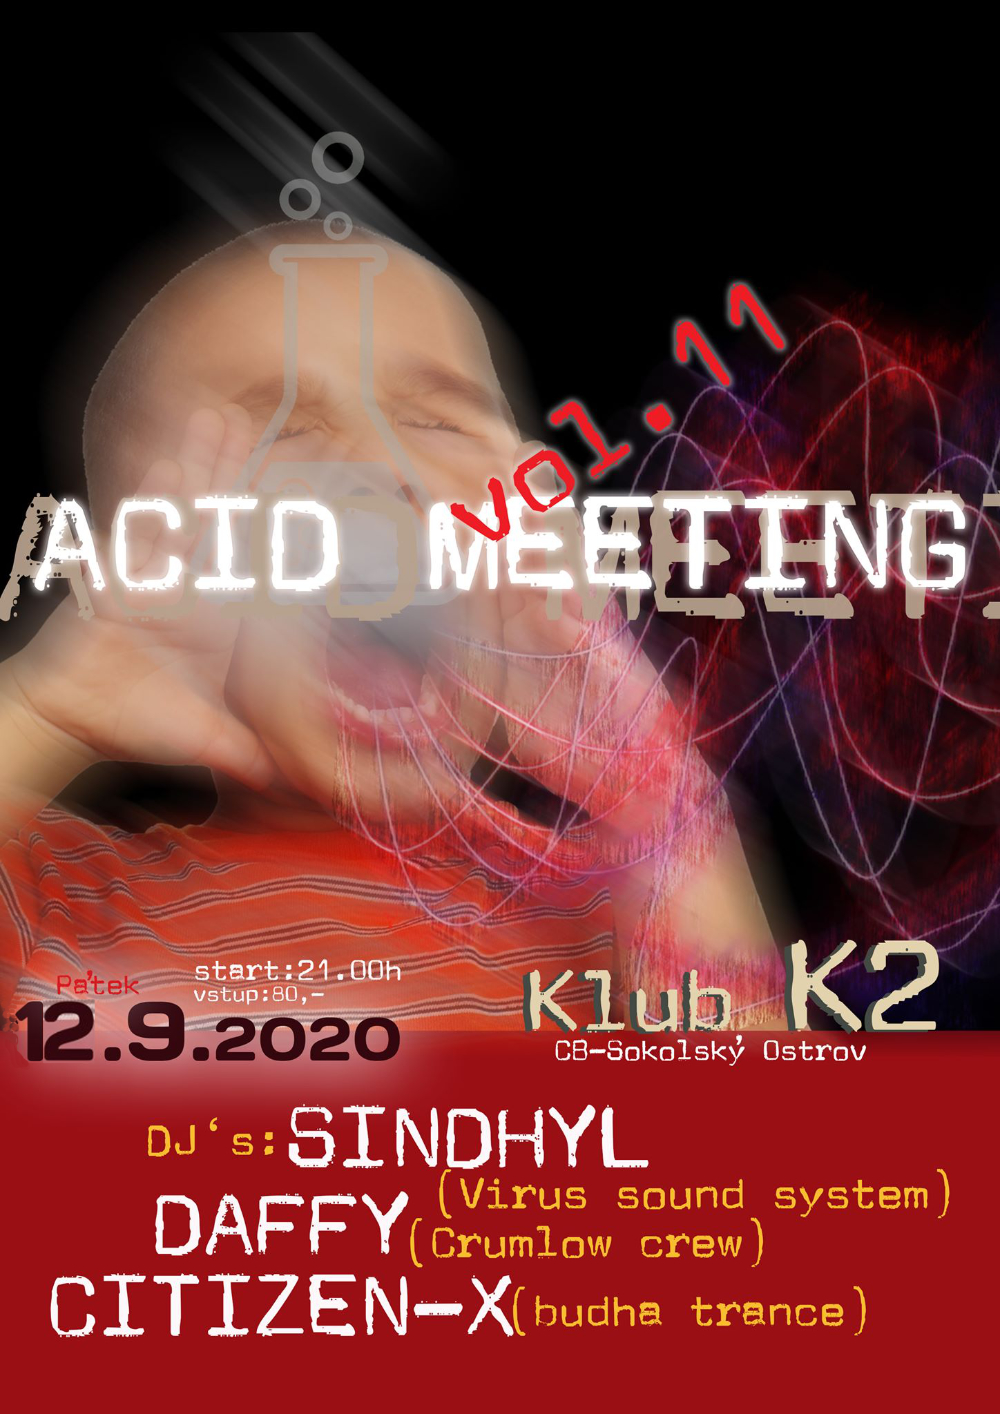 Acid virus meeting vol. XI